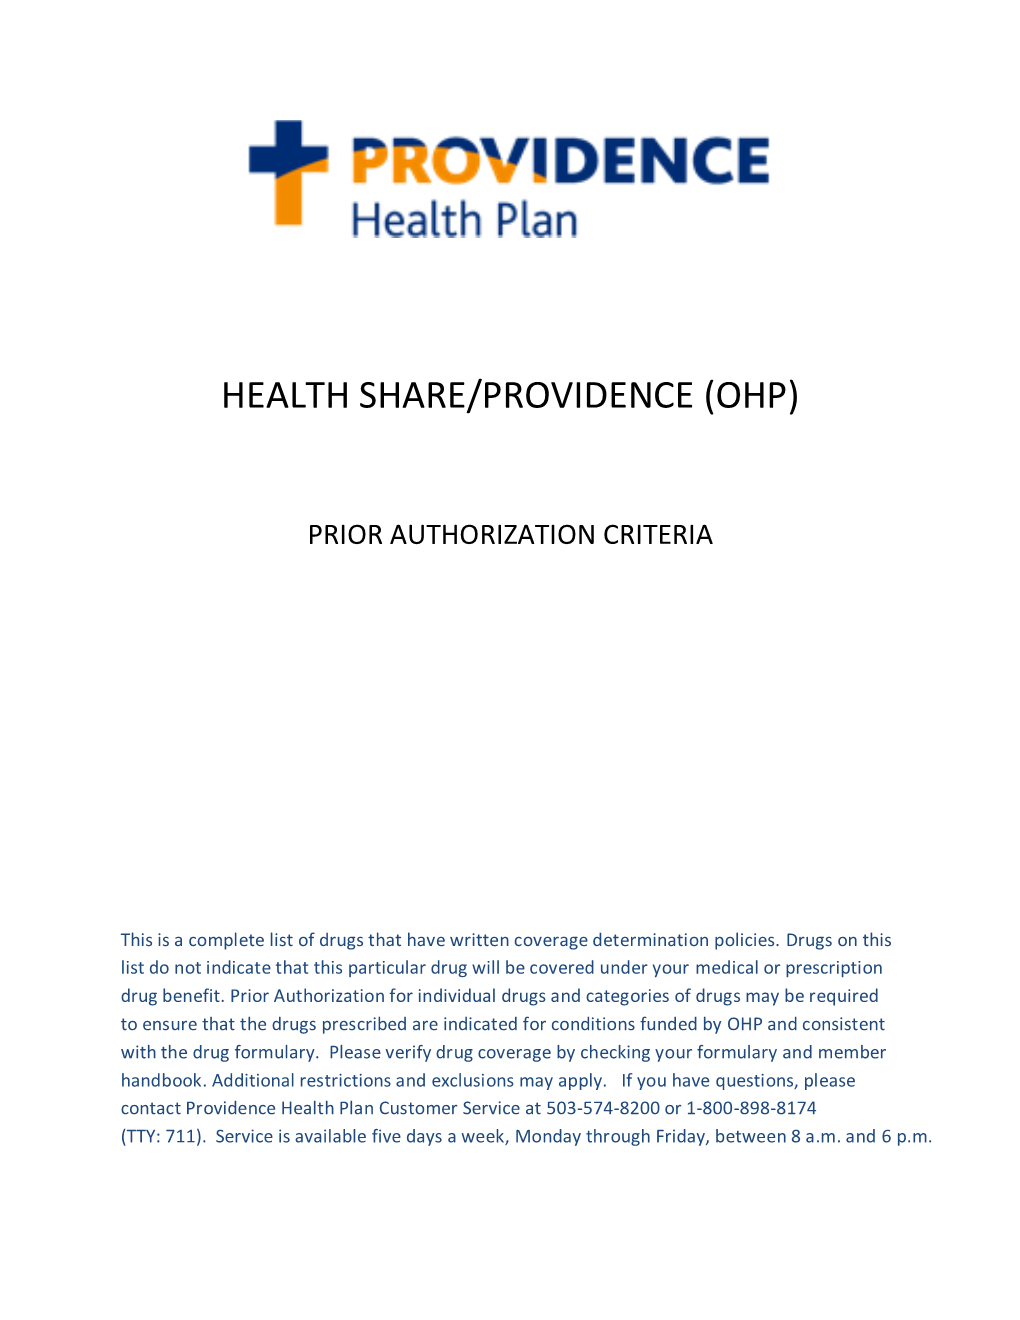 Health Share/Providence (Ohp)